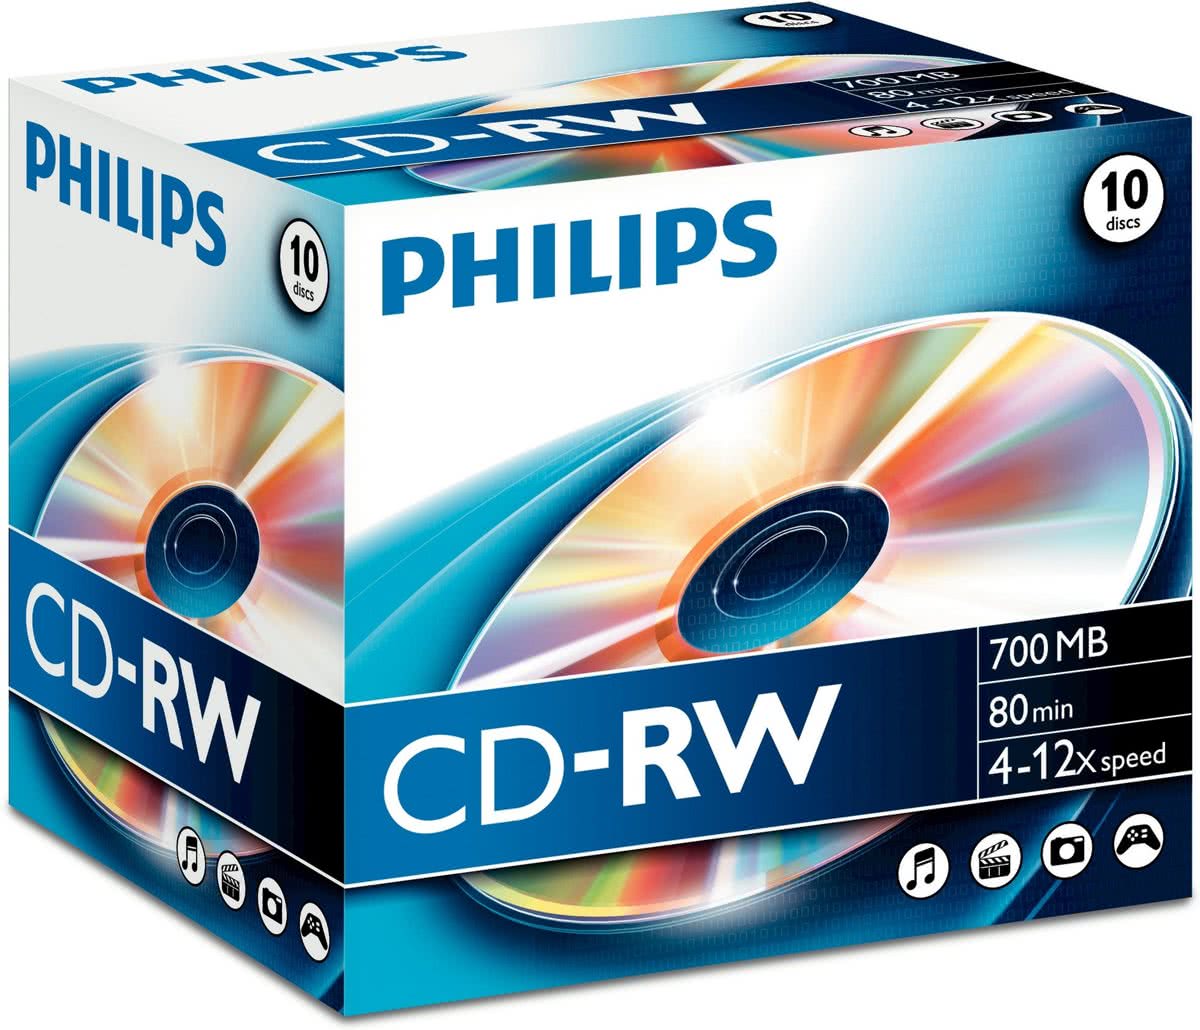 Philips CD-RW CW7D2NJ10/00